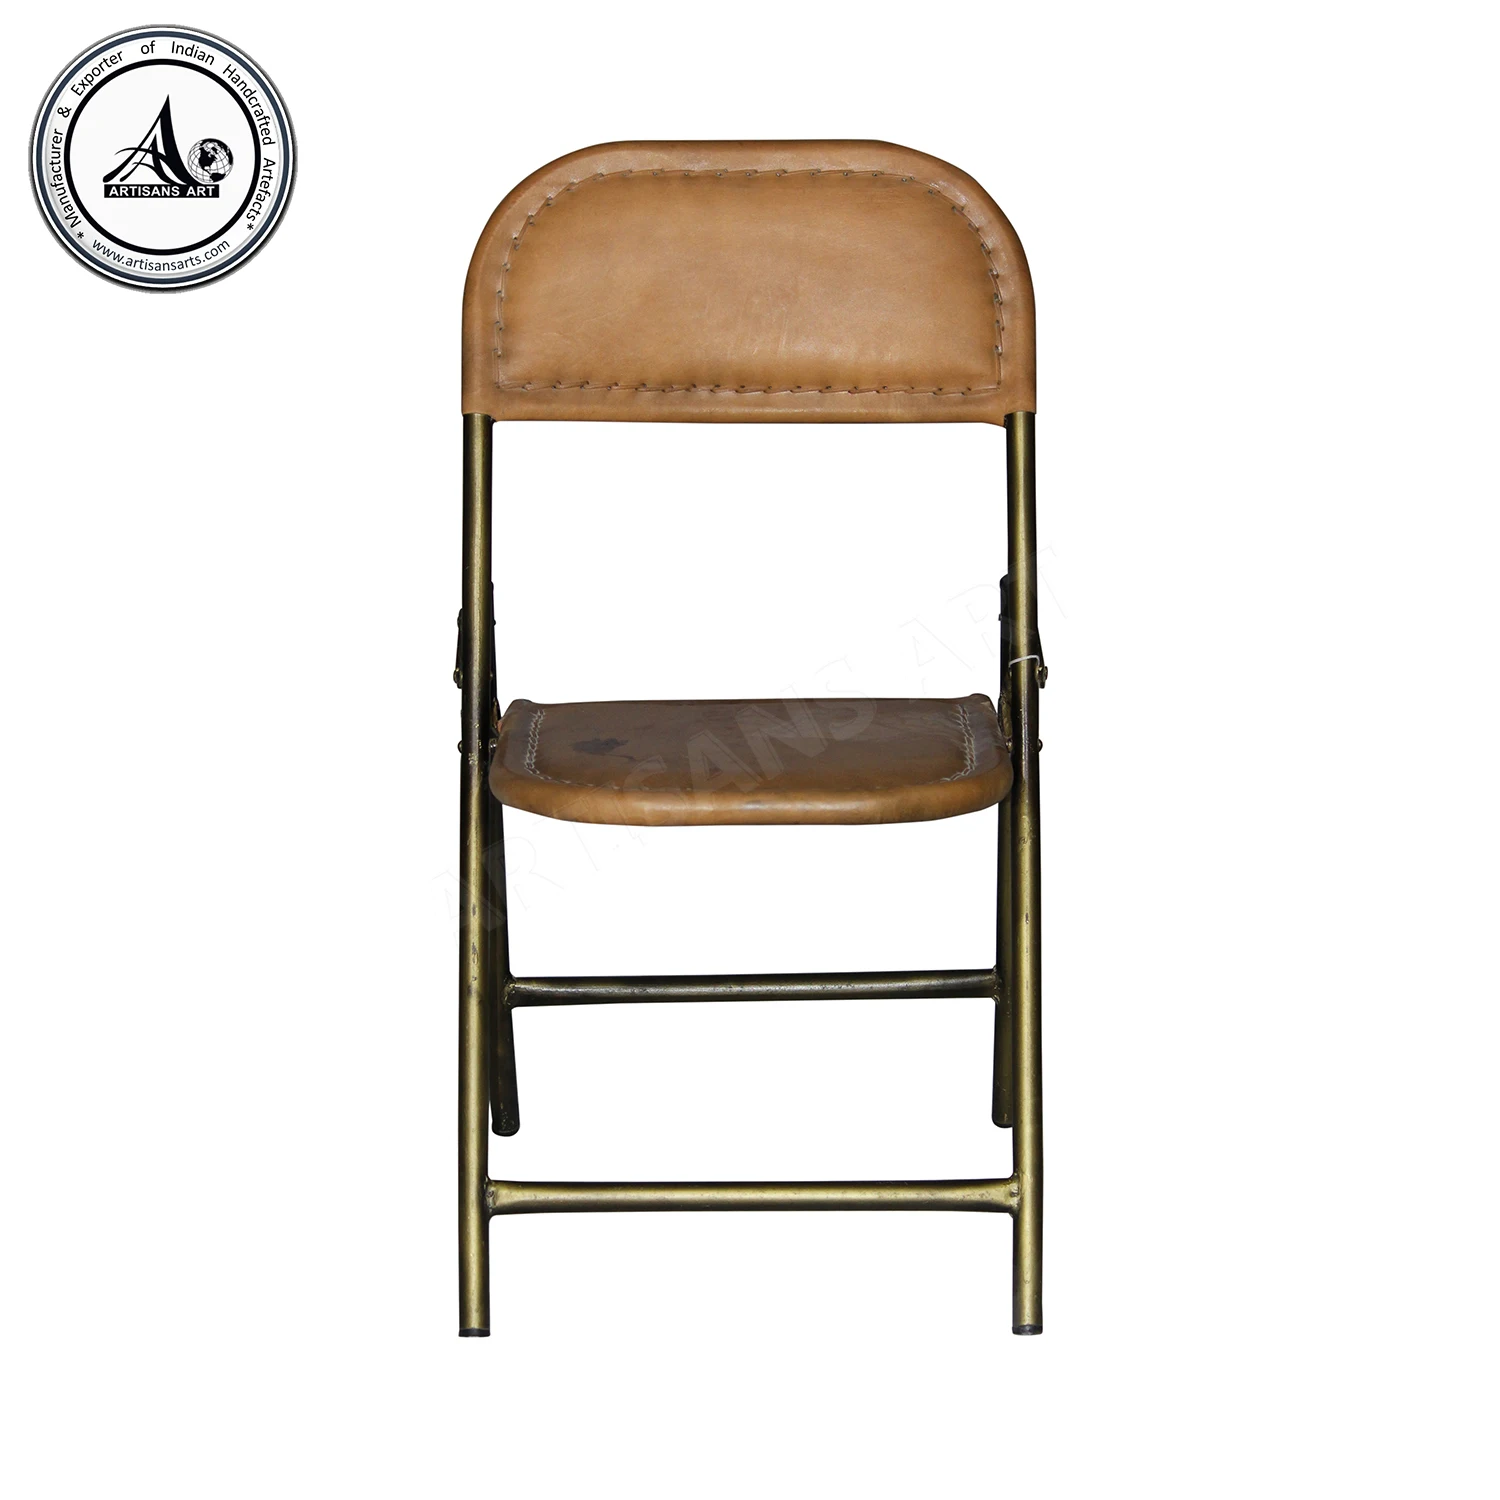 vintage genuine leather folding chair rustic| Alibaba.com